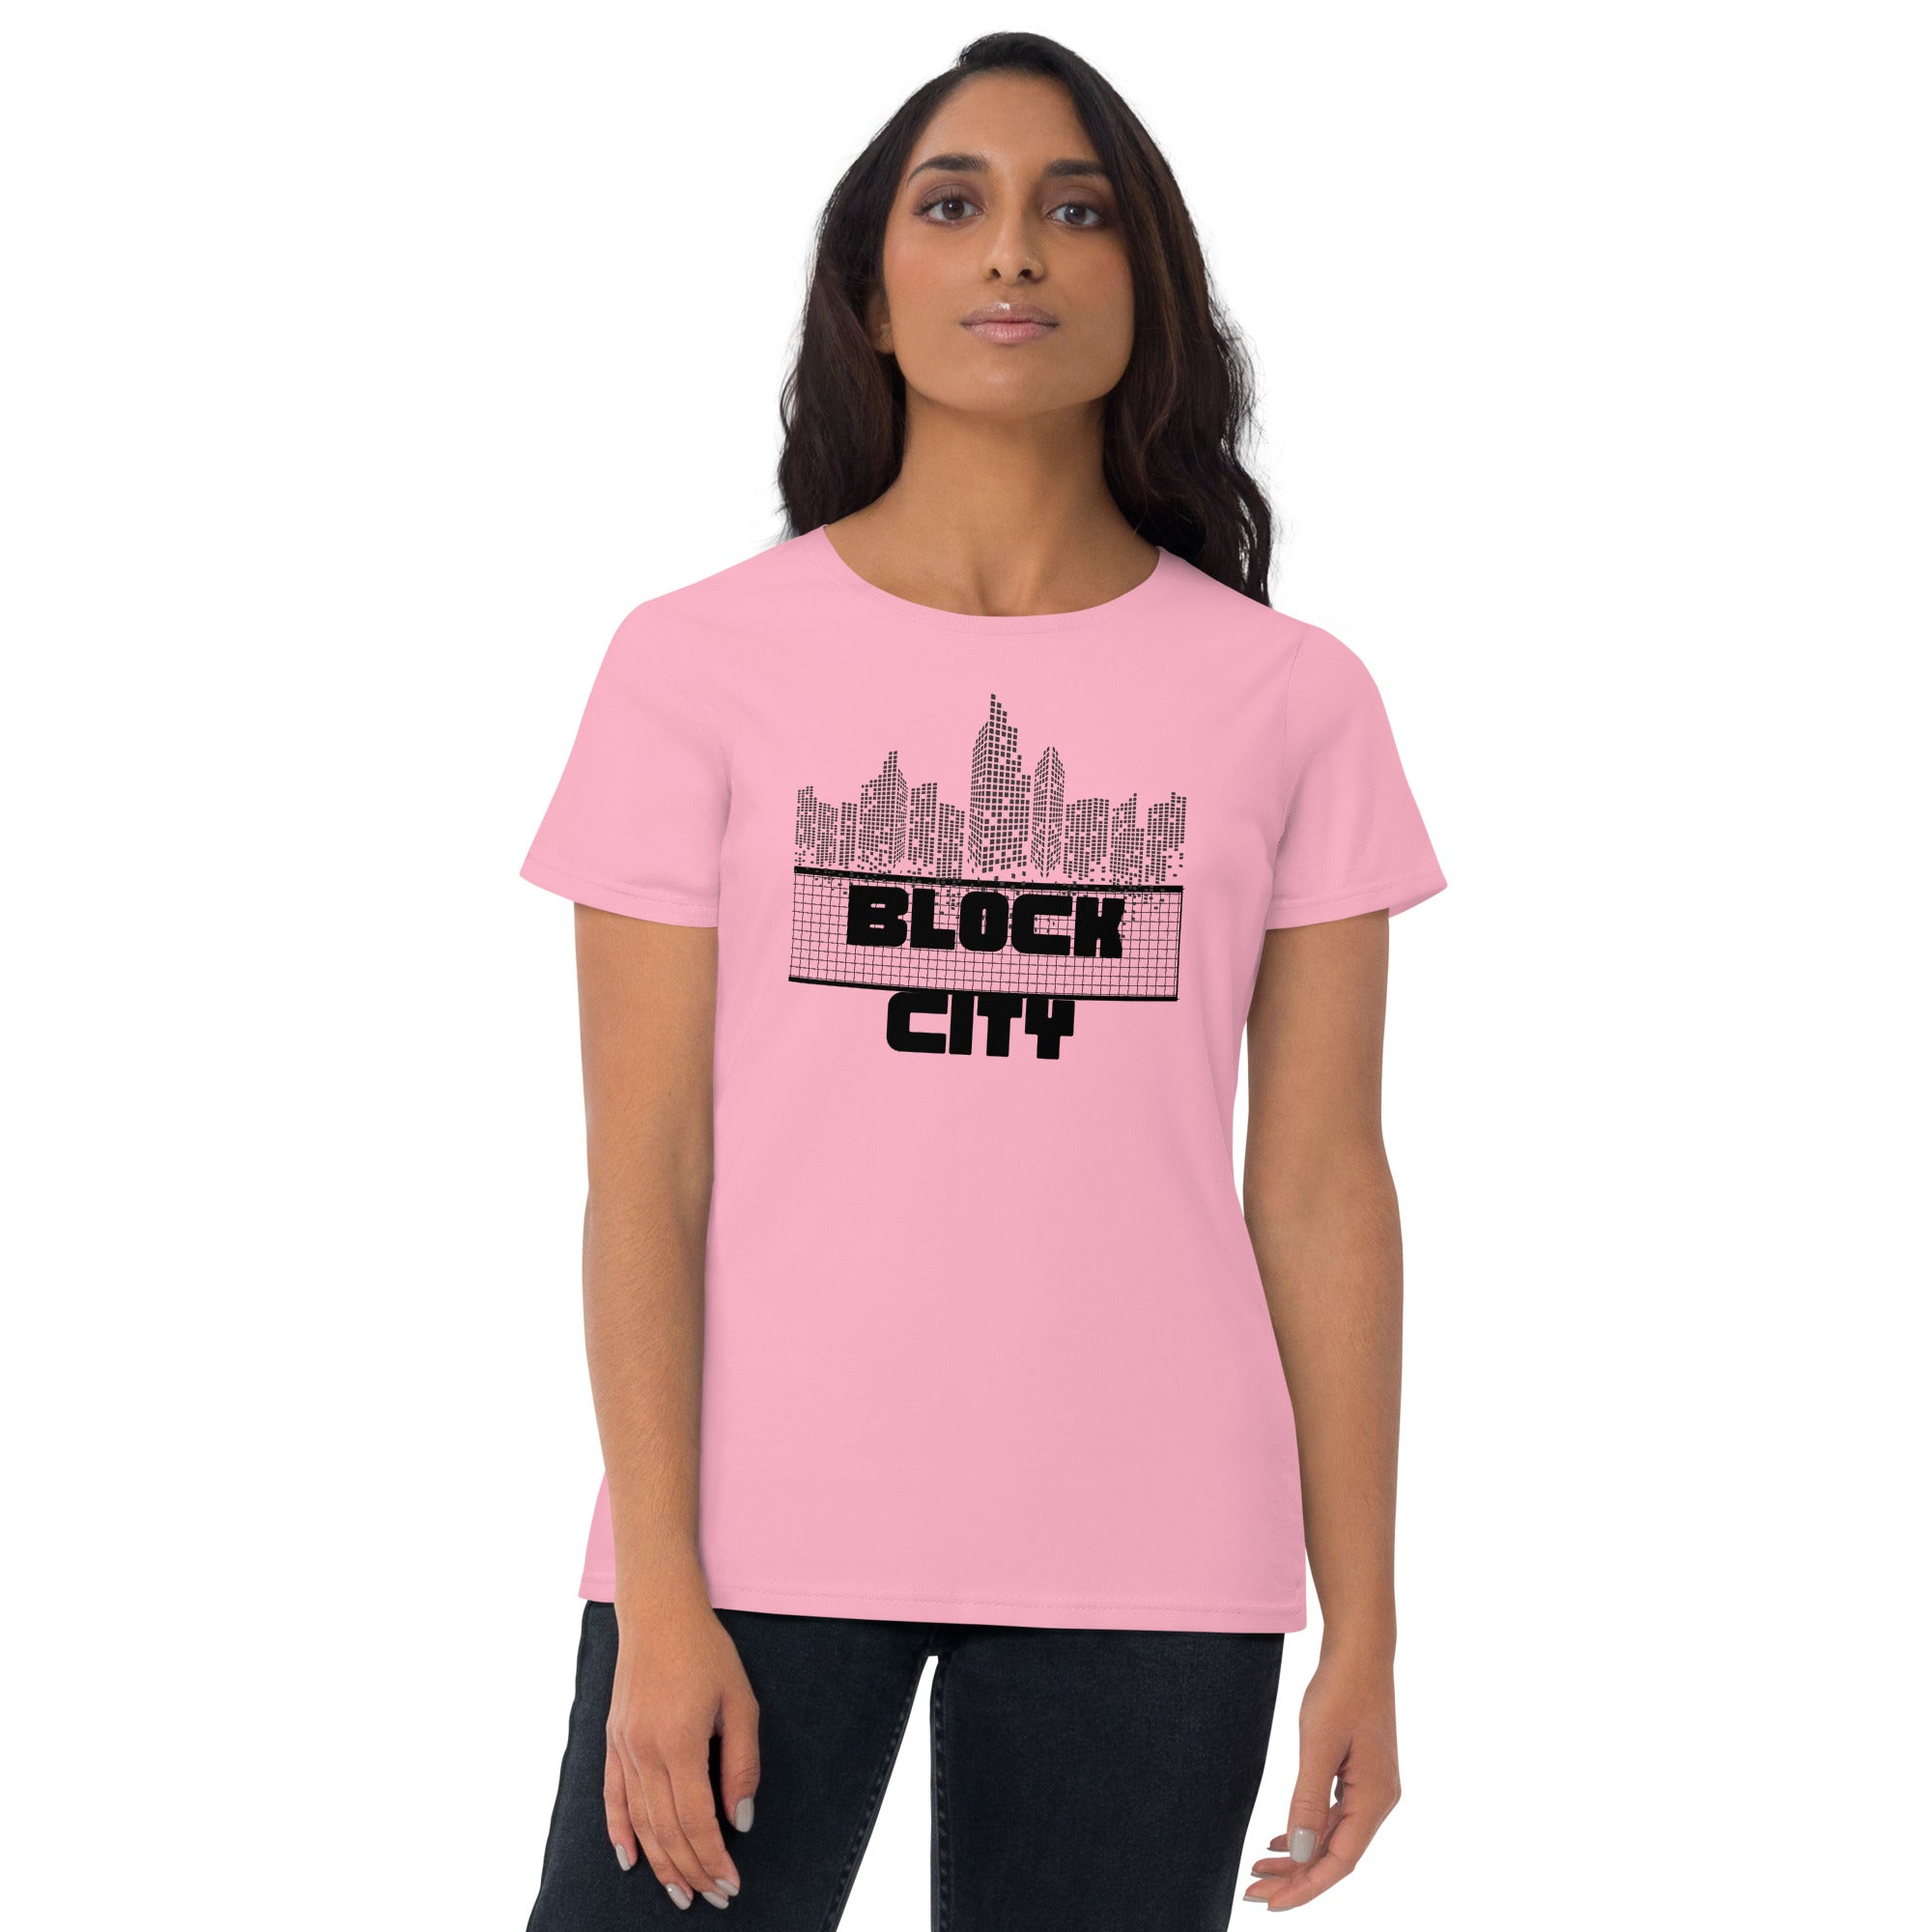 Block City Women's Fitted T-Shirt